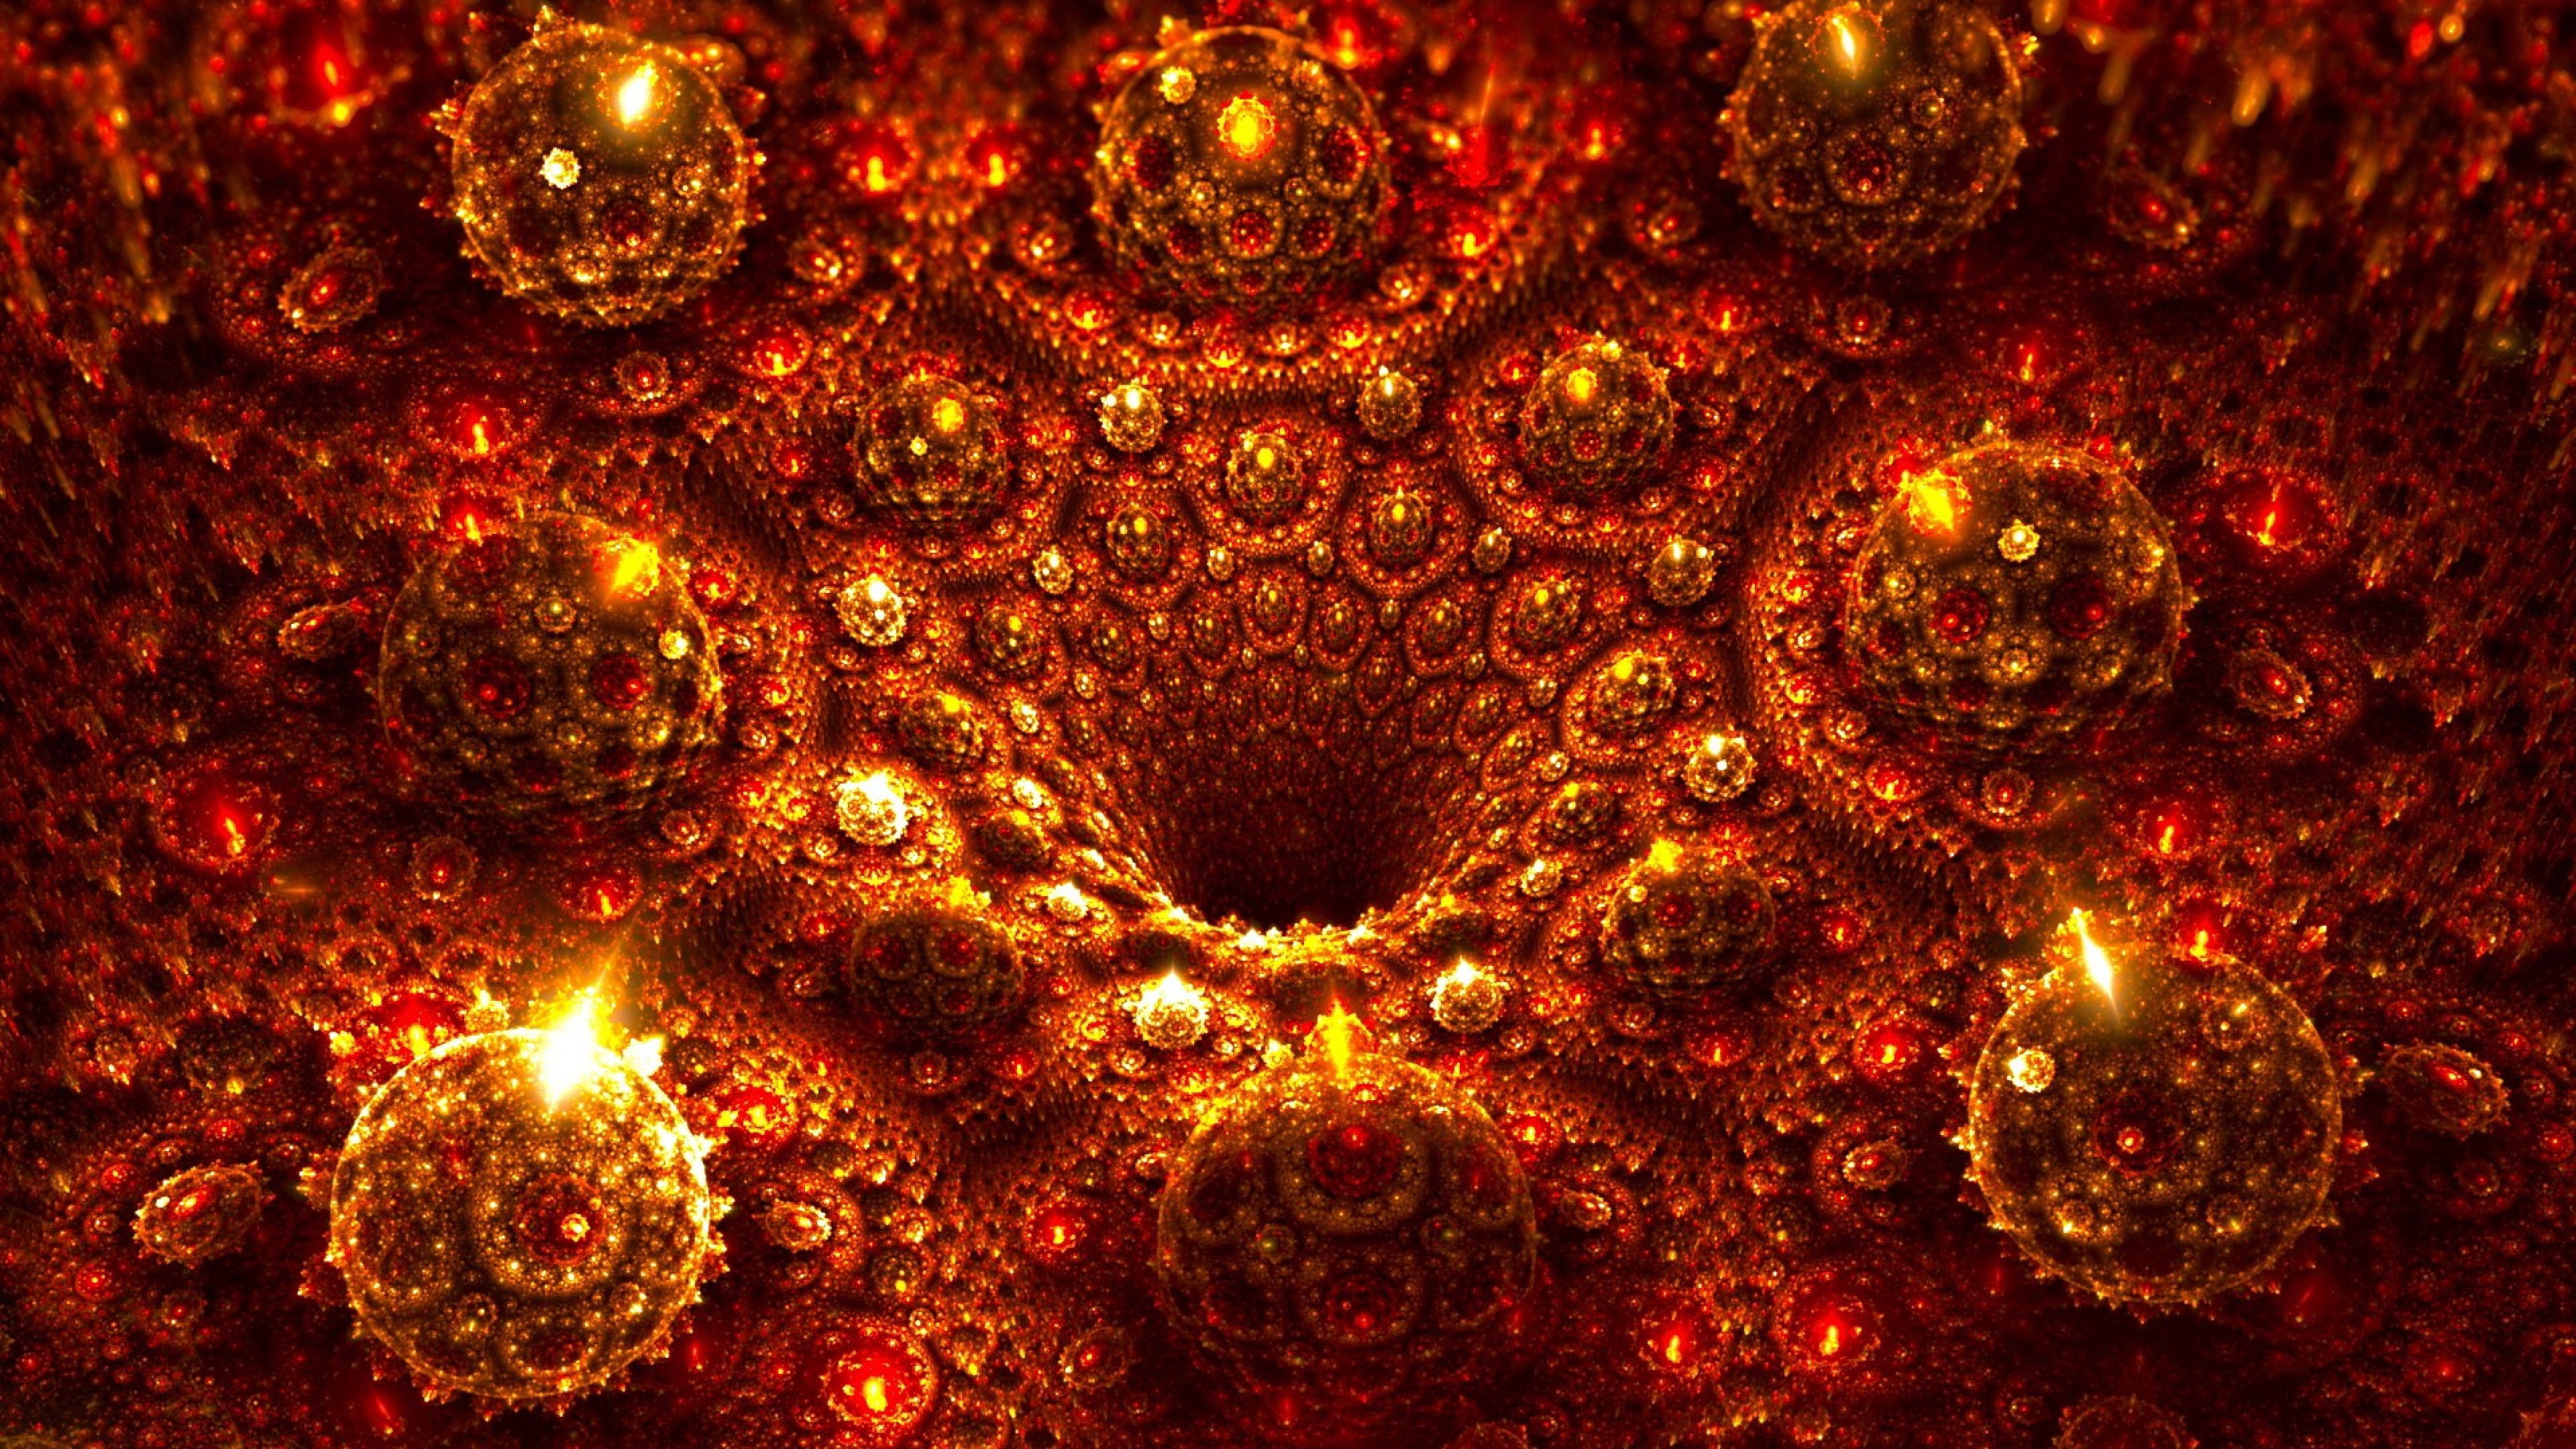  Burning Immersion Lava Patterns Wallpaper Background 4K Ultra HD 3840x2160